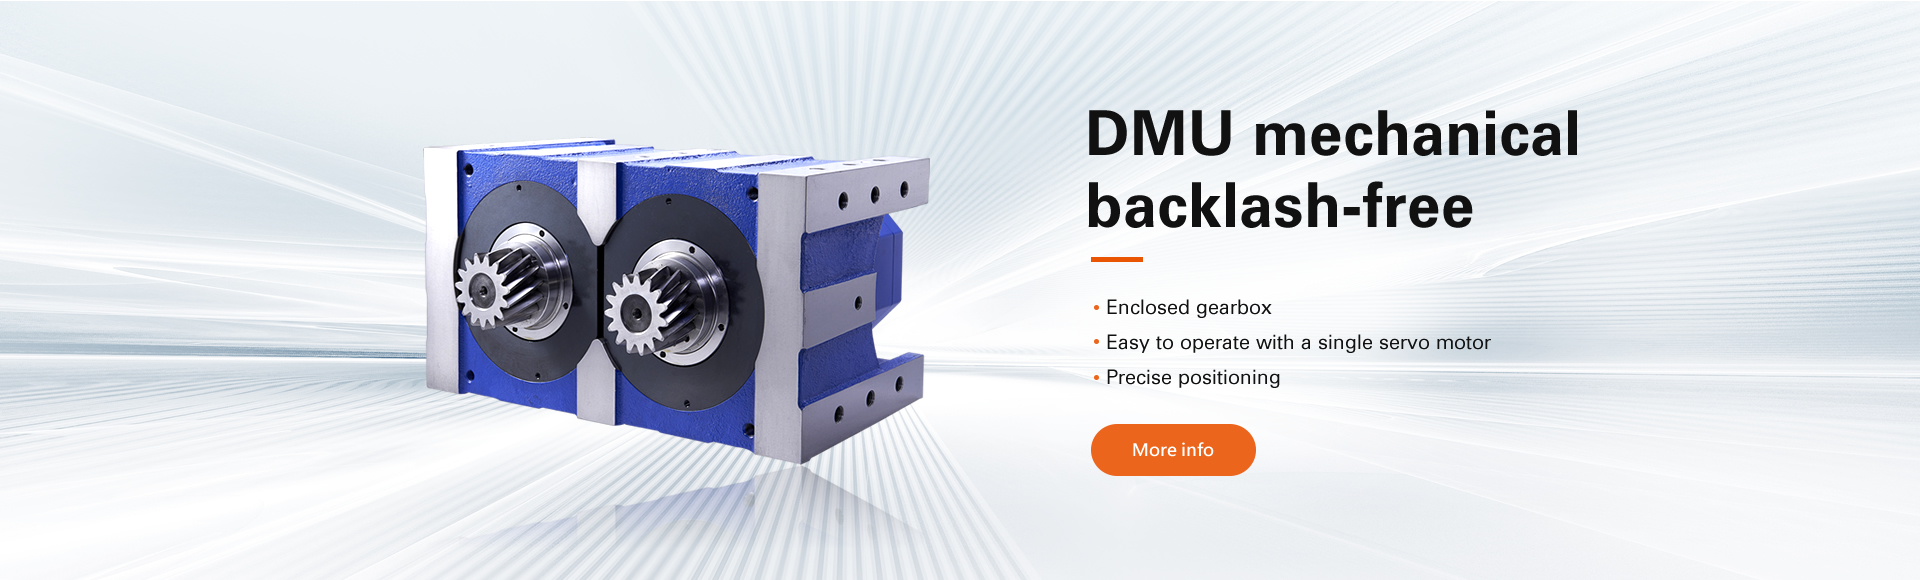 DMU Mechanical Backlash-free